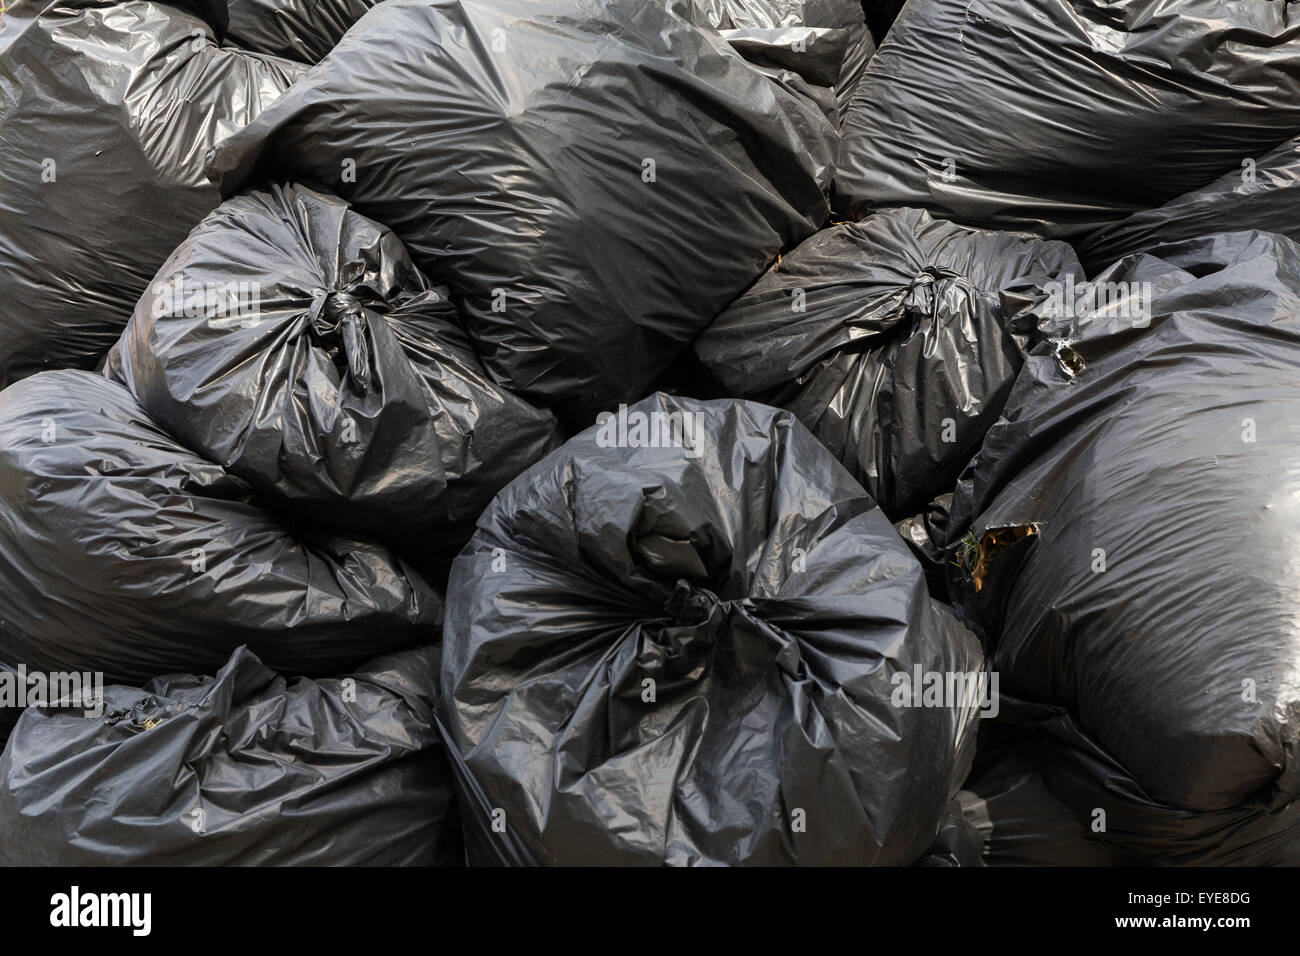 https://c8.alamy.com/comp/EYE8DG/big-stack-of-black-garbage-bags-EYE8DG.jpg